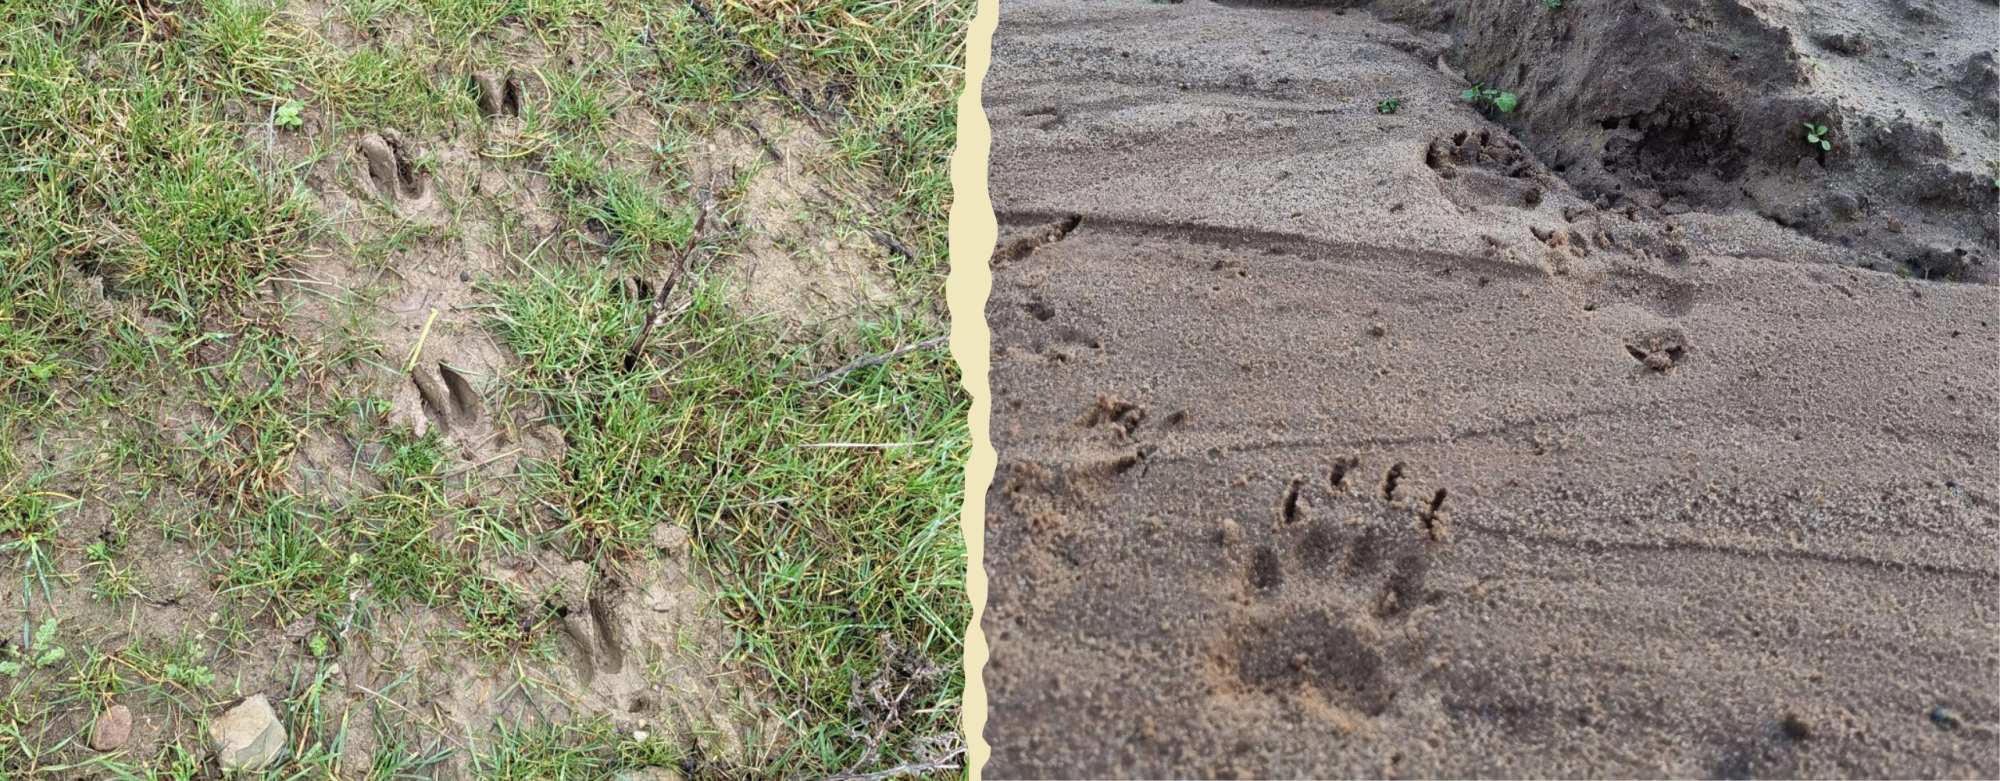 Roe deer tracks in muddy grass and badger tracks in sandy dirt